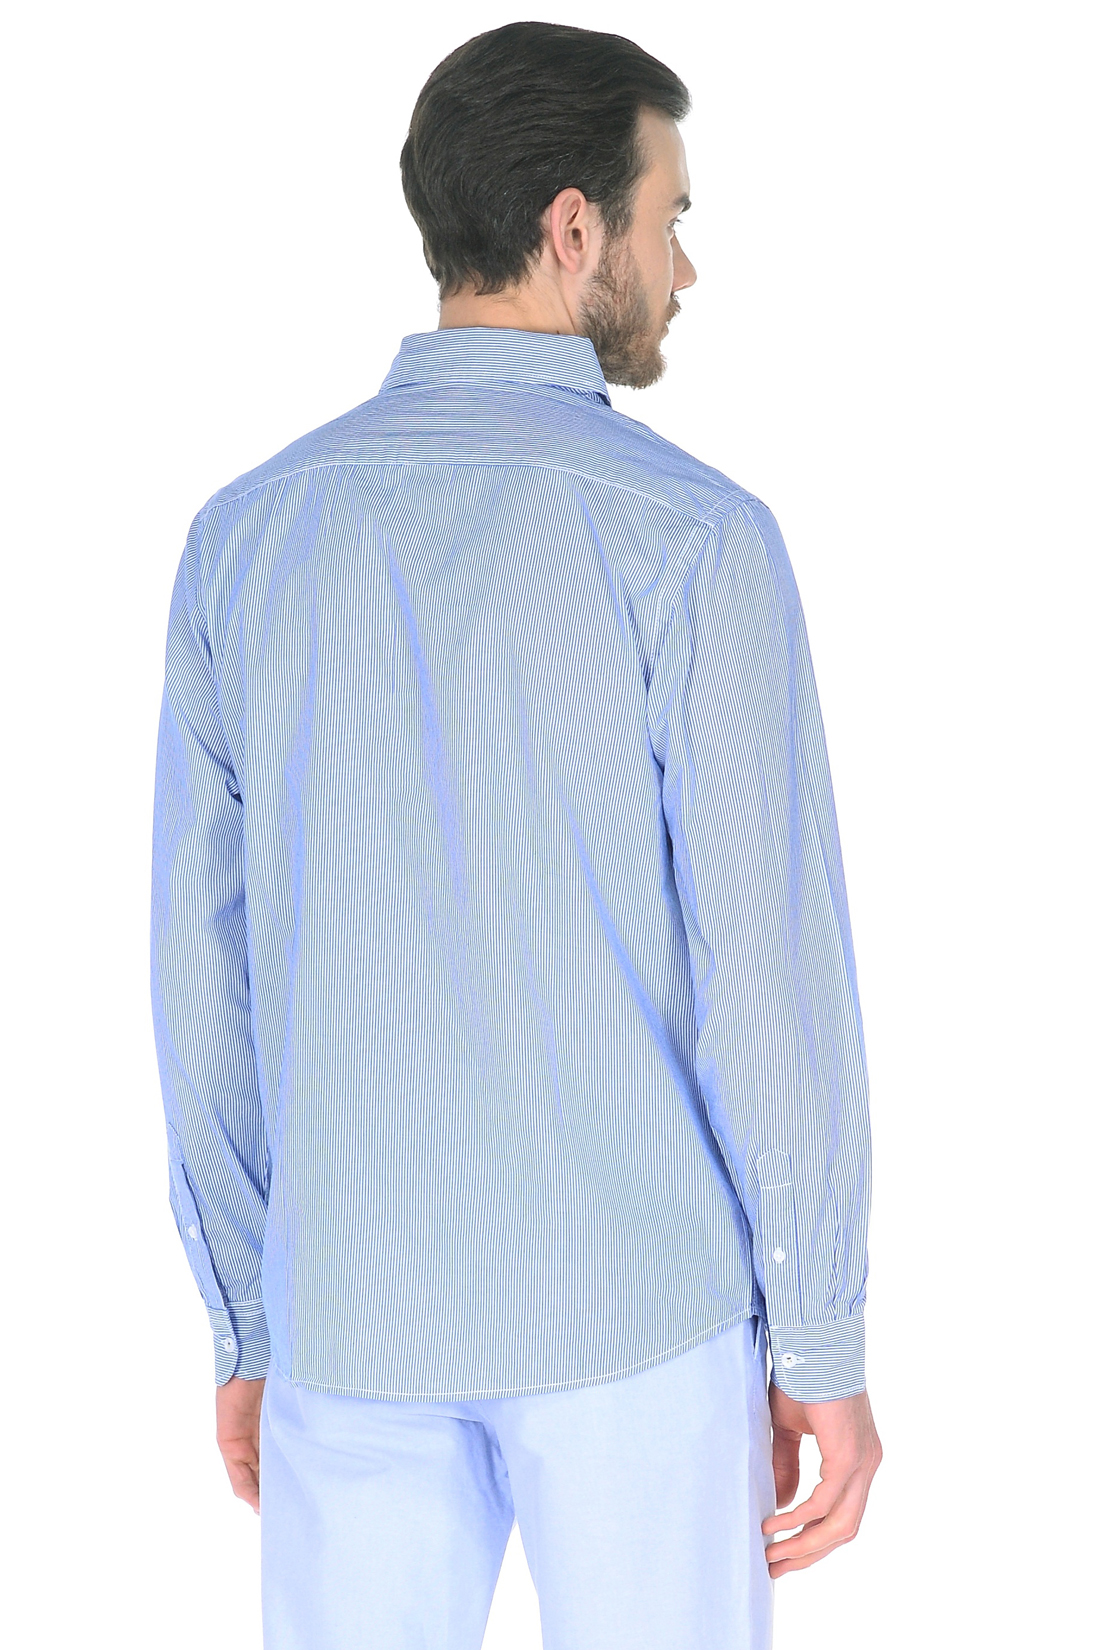 Рубашка в тонкую полоску (арт. baon B668012), размер M, цвет angel blue striped#голубой Рубашка в тонкую полоску (арт. baon B668012) - фото 2